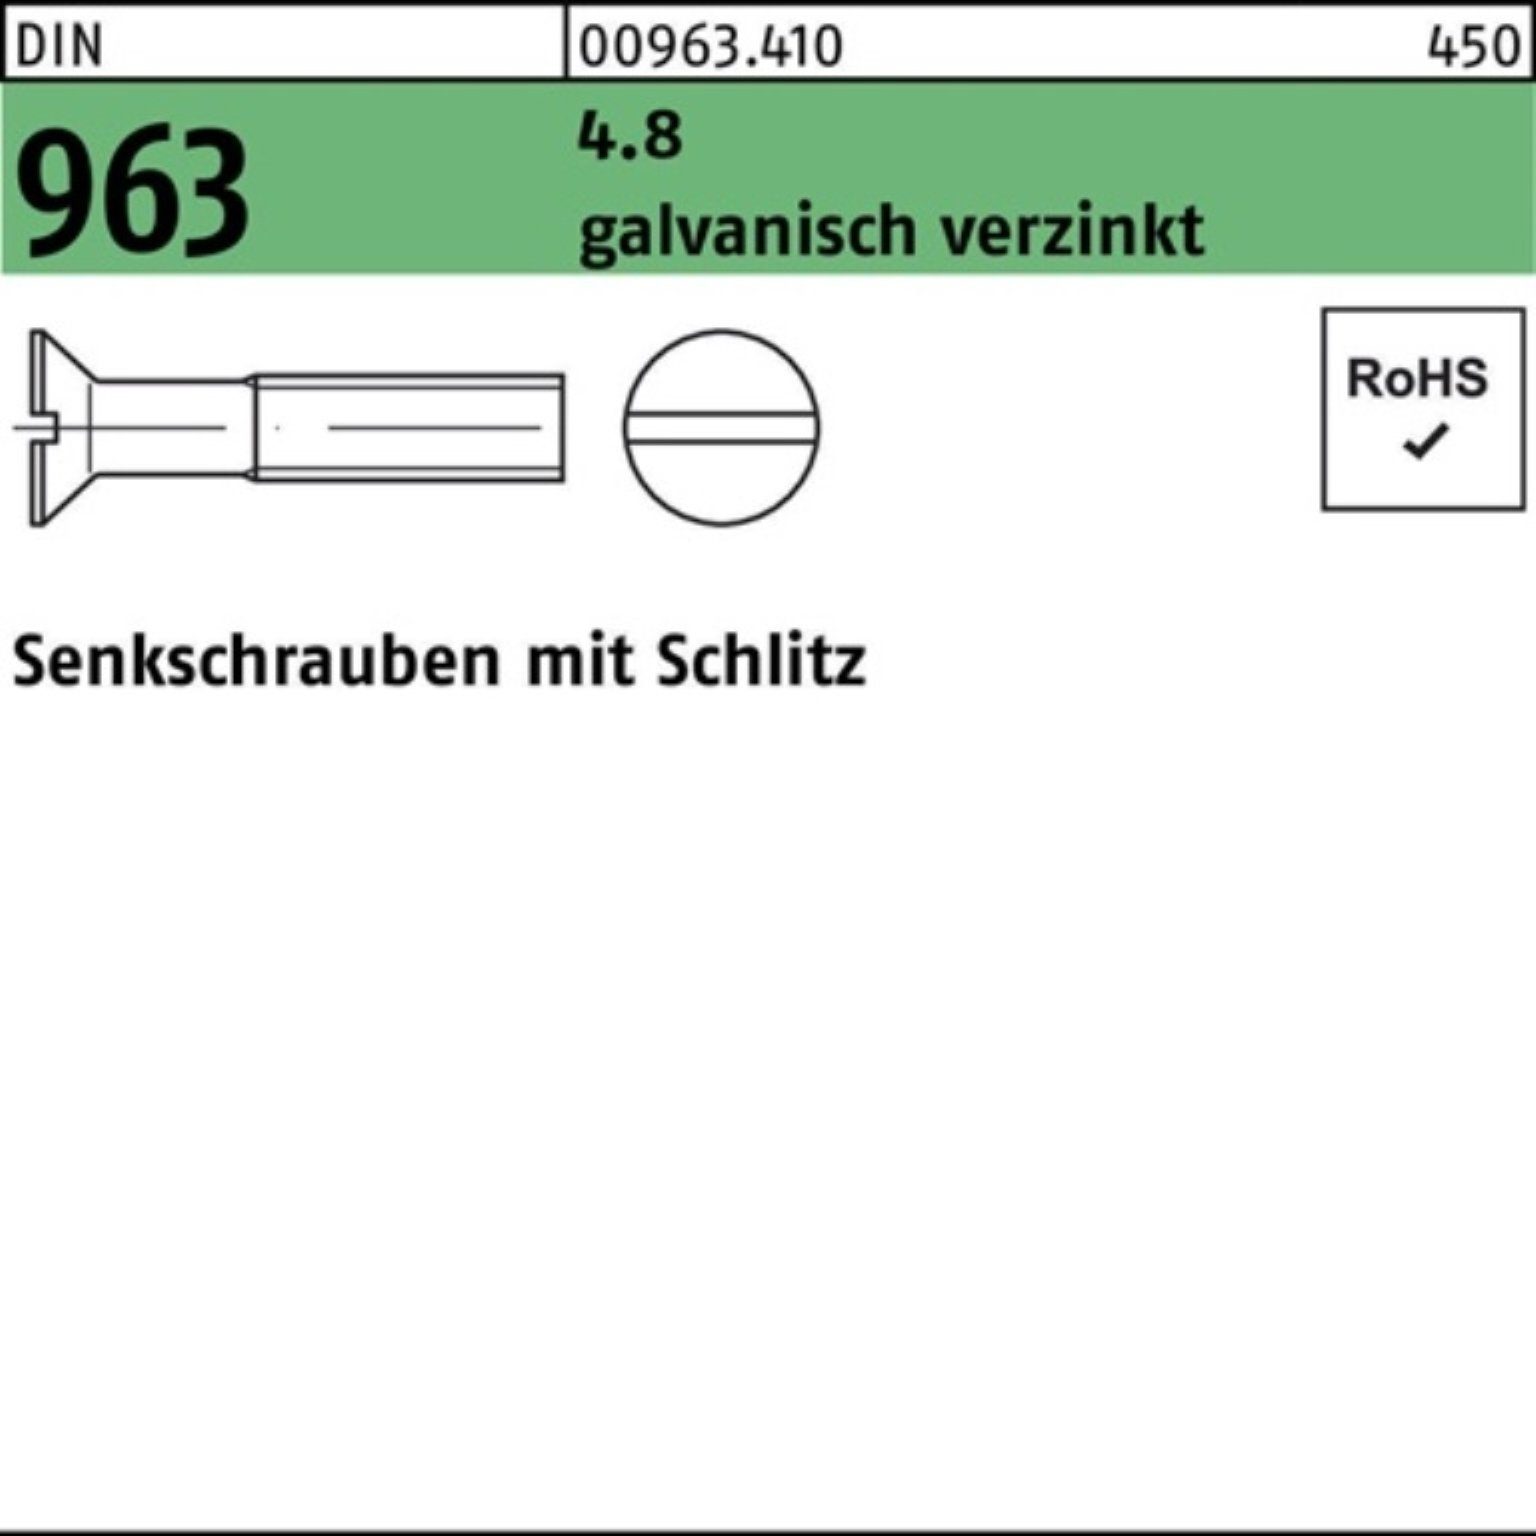 Reyher Senkschraube M5x 200er DIN 200 Schlitz 25 Pack 4.8 Senkschraube 963 galv.verz. Stü